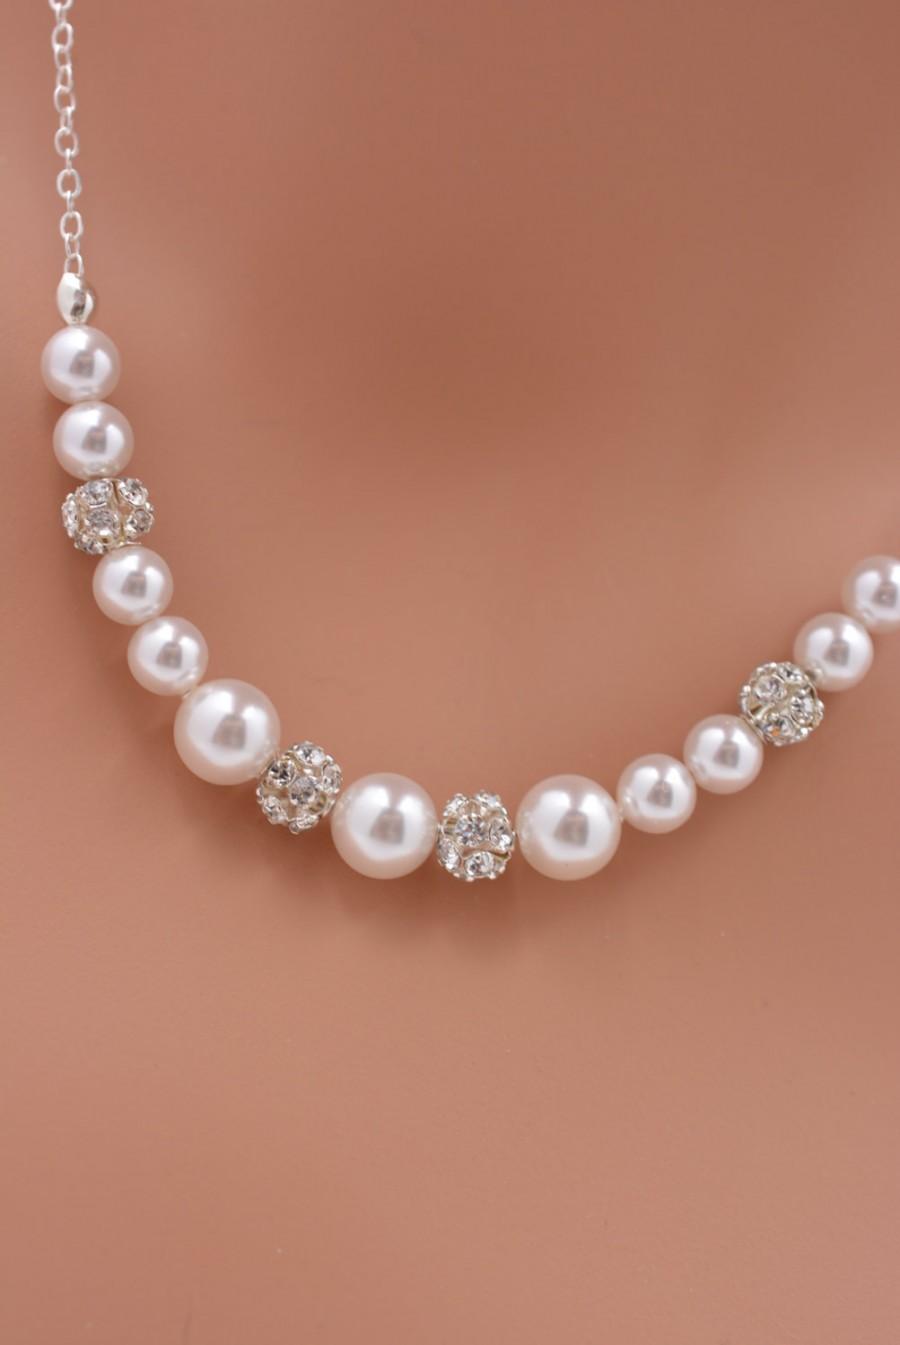 زفاف - Set of 6 Pearl and Rhinestone Necklaces, 6 Bridesmaid Silver Necklaces, Ivory White Pearl Necklaces, Pearl Strand and Crystal Necklace 0232